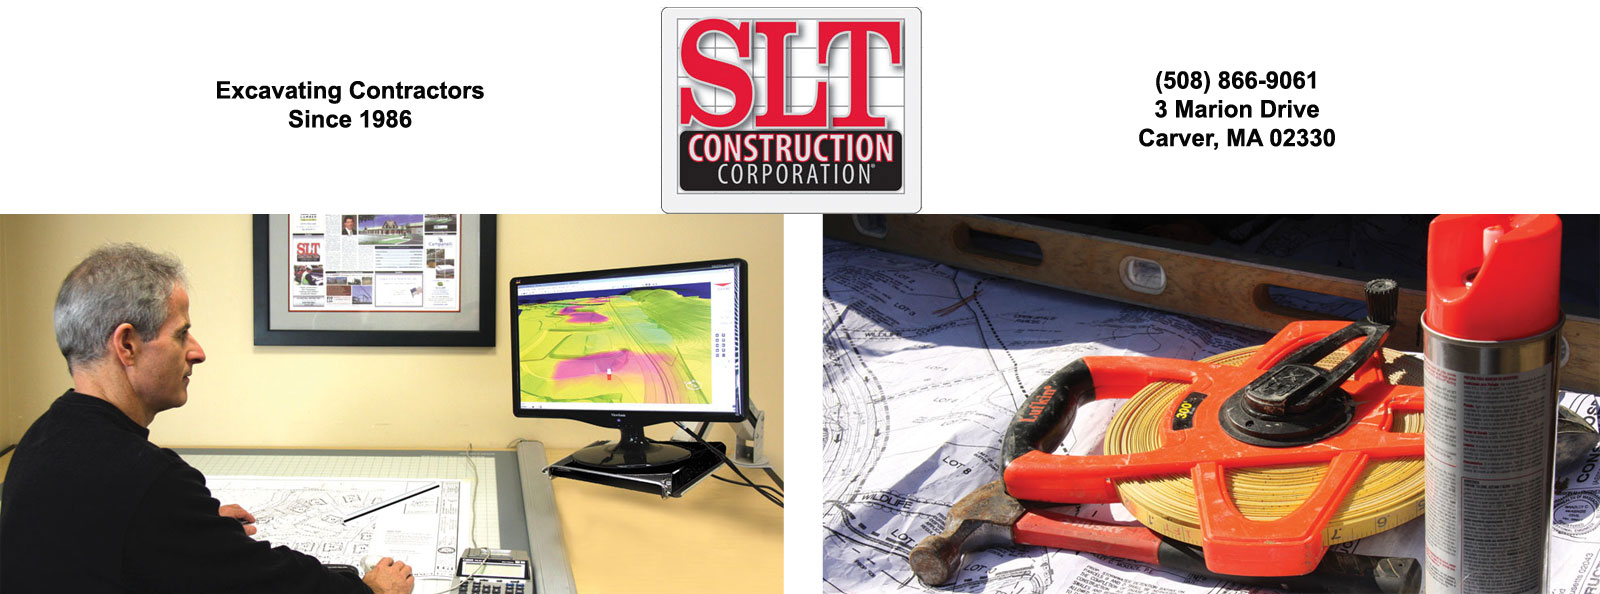 SLT Construction Excavating Contractors Since 1986